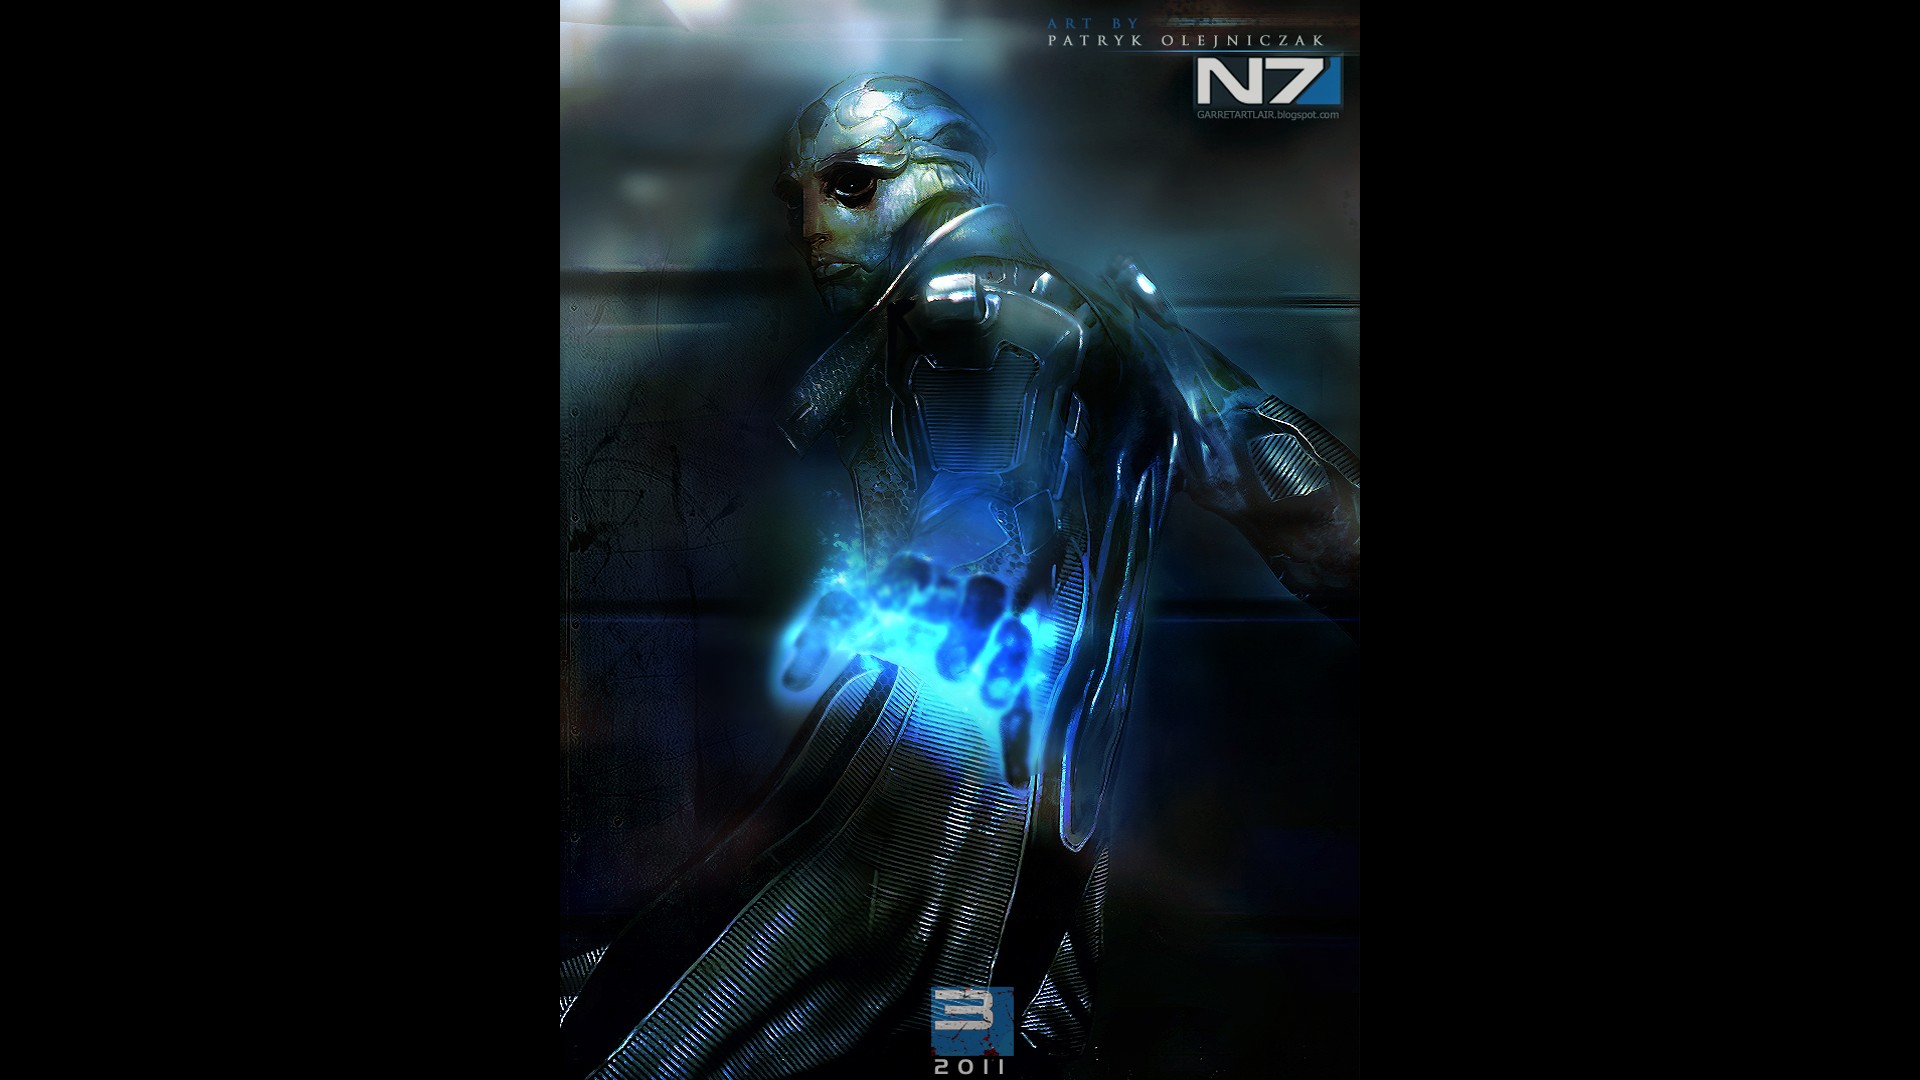 Descarga gratis la imagen Mass Effect, Videojuego, Mass Effect 3, Thane Krios en el escritorio de tu PC